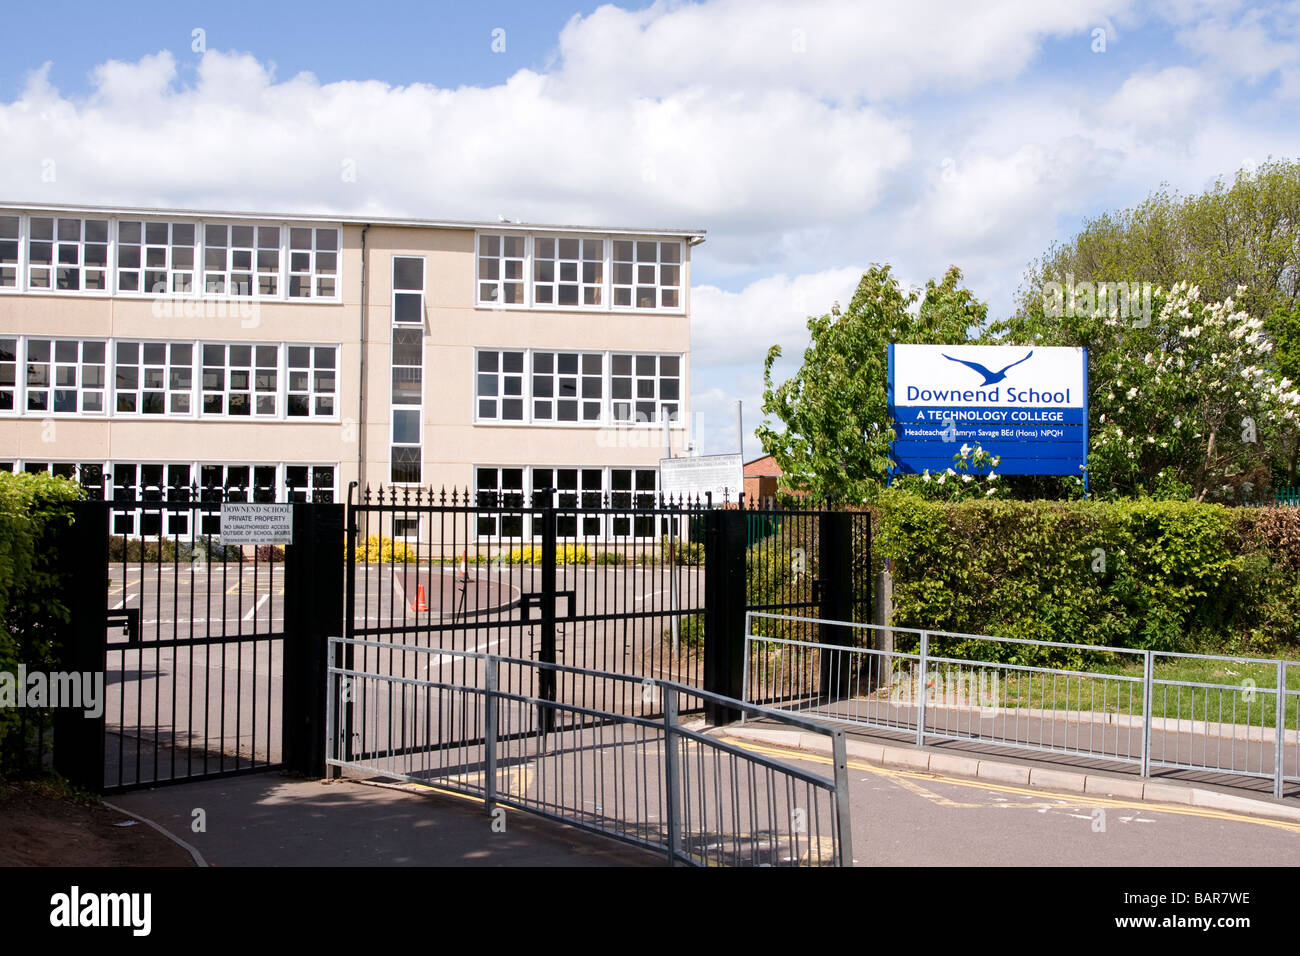 Downend School South Gloucestershire England UK Stock Photo